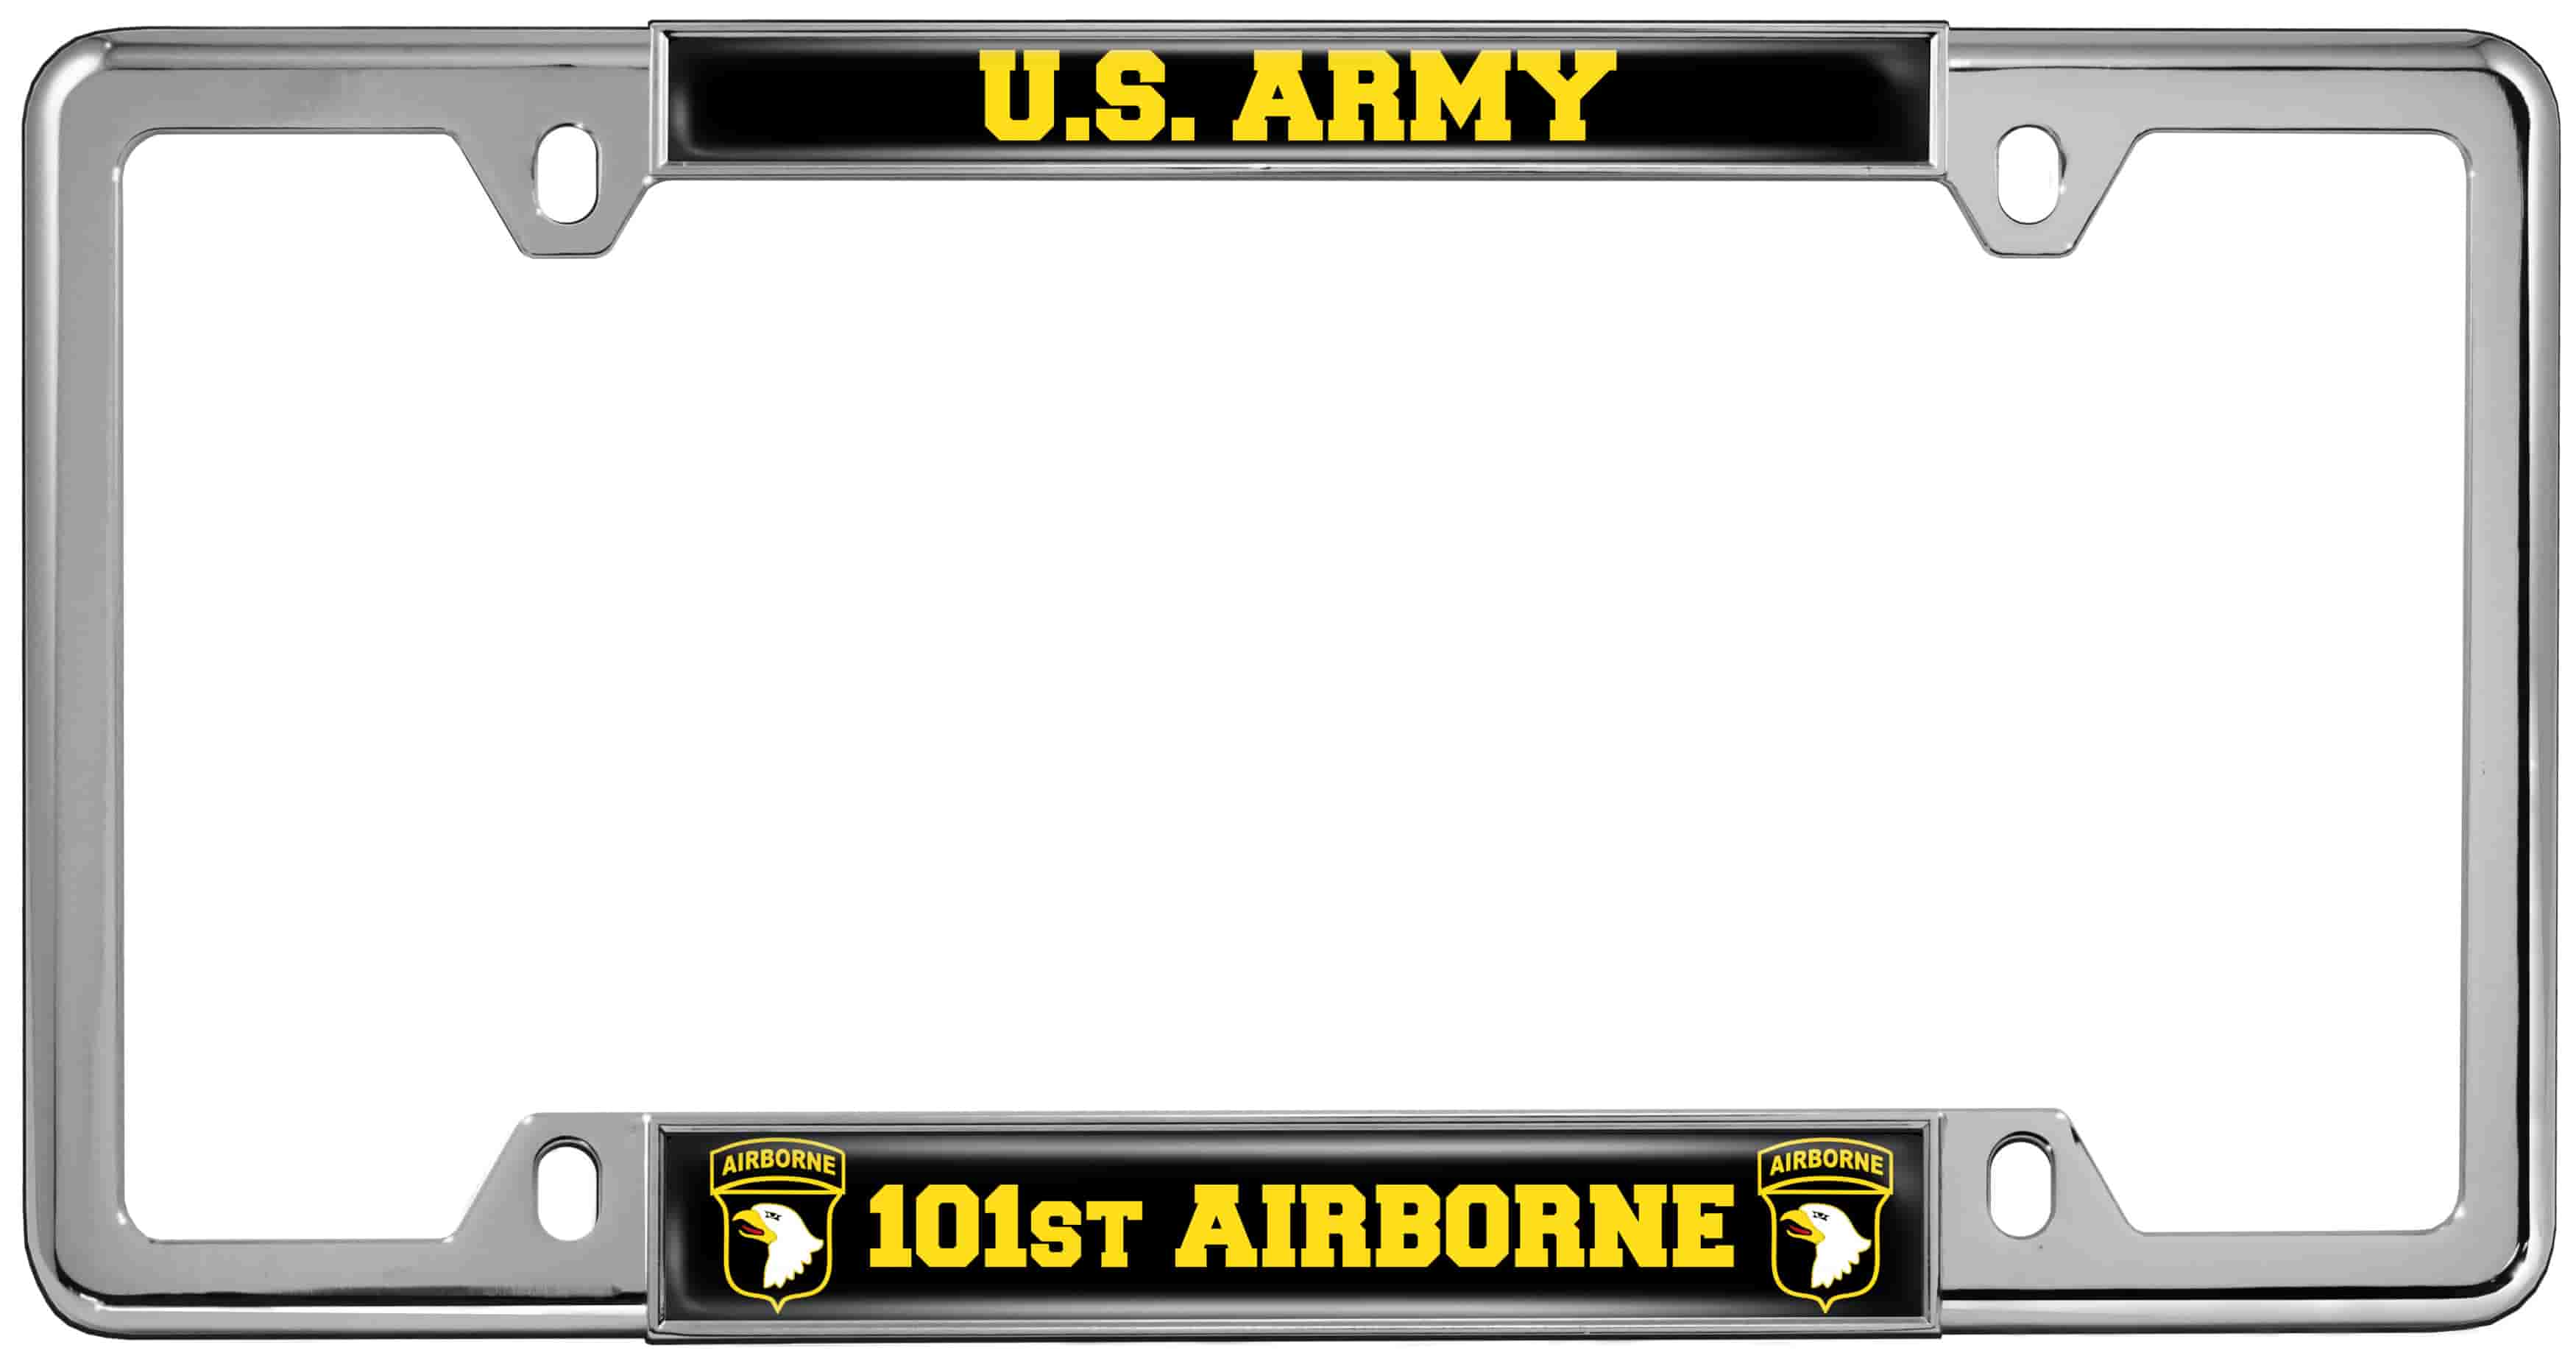 U.S. Army 101st Airborne - Car Metal License Plate Frame